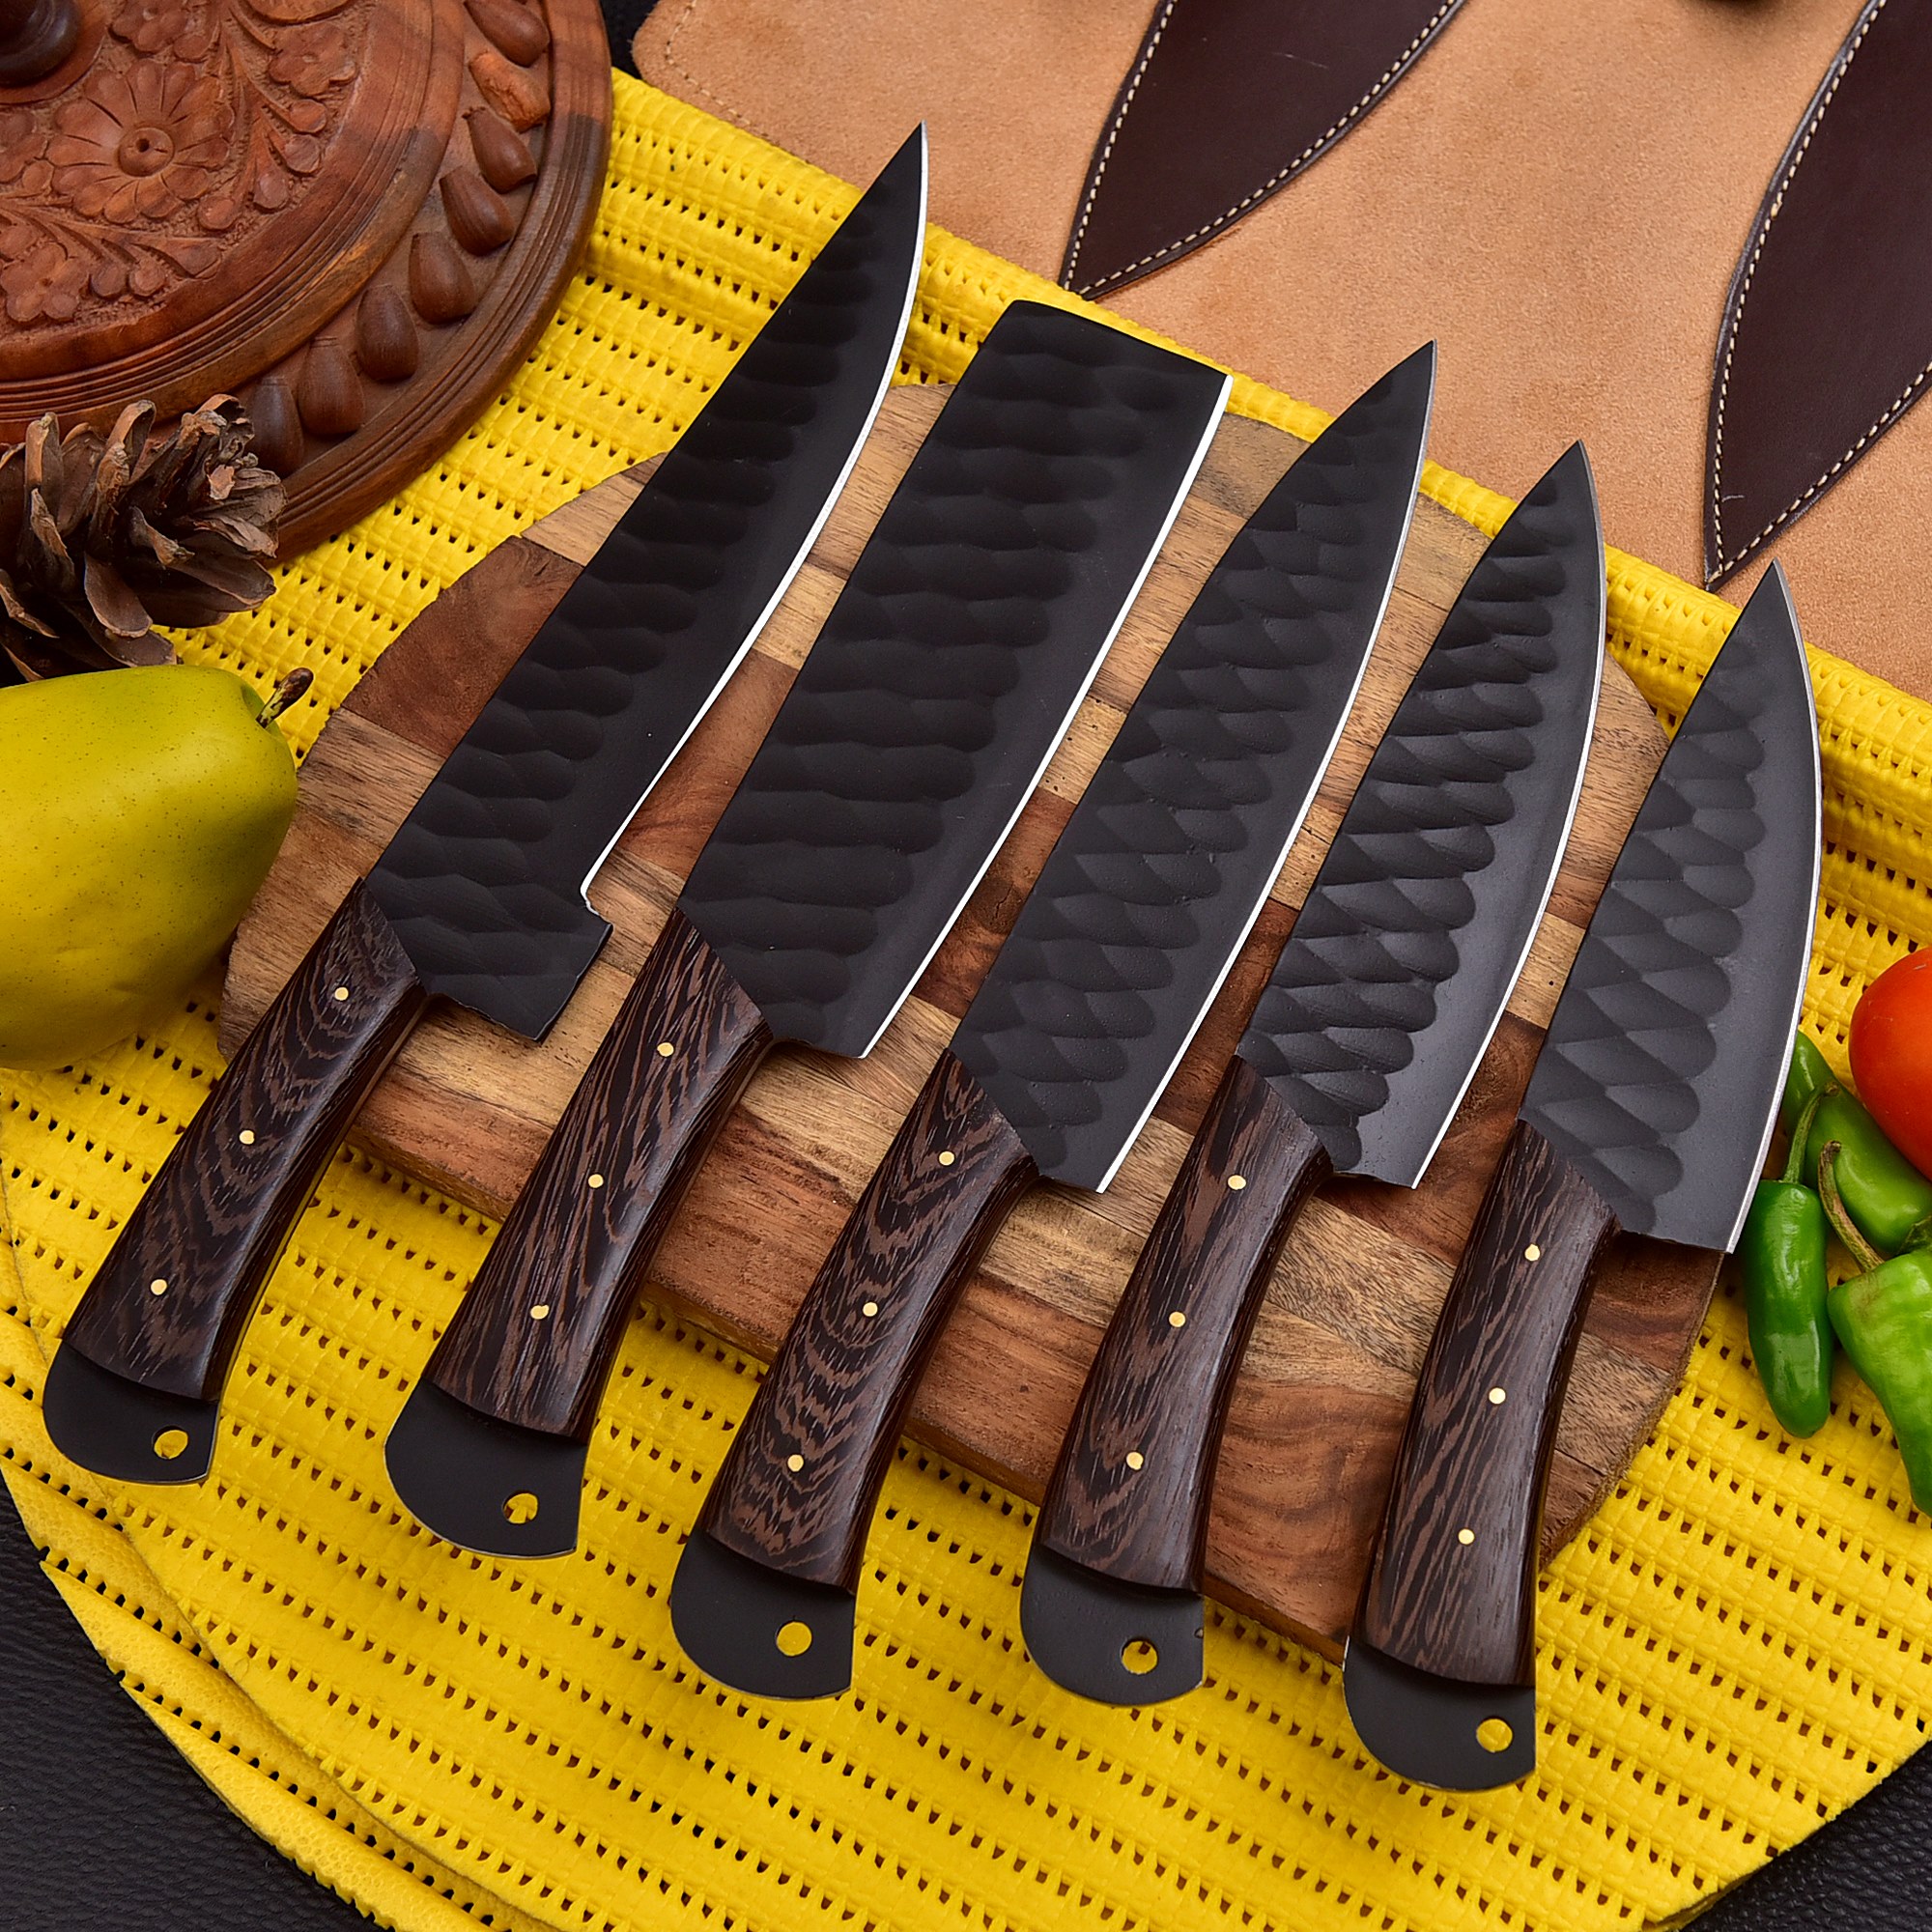 Professional Culinary Knife Set | creativekitchensupply